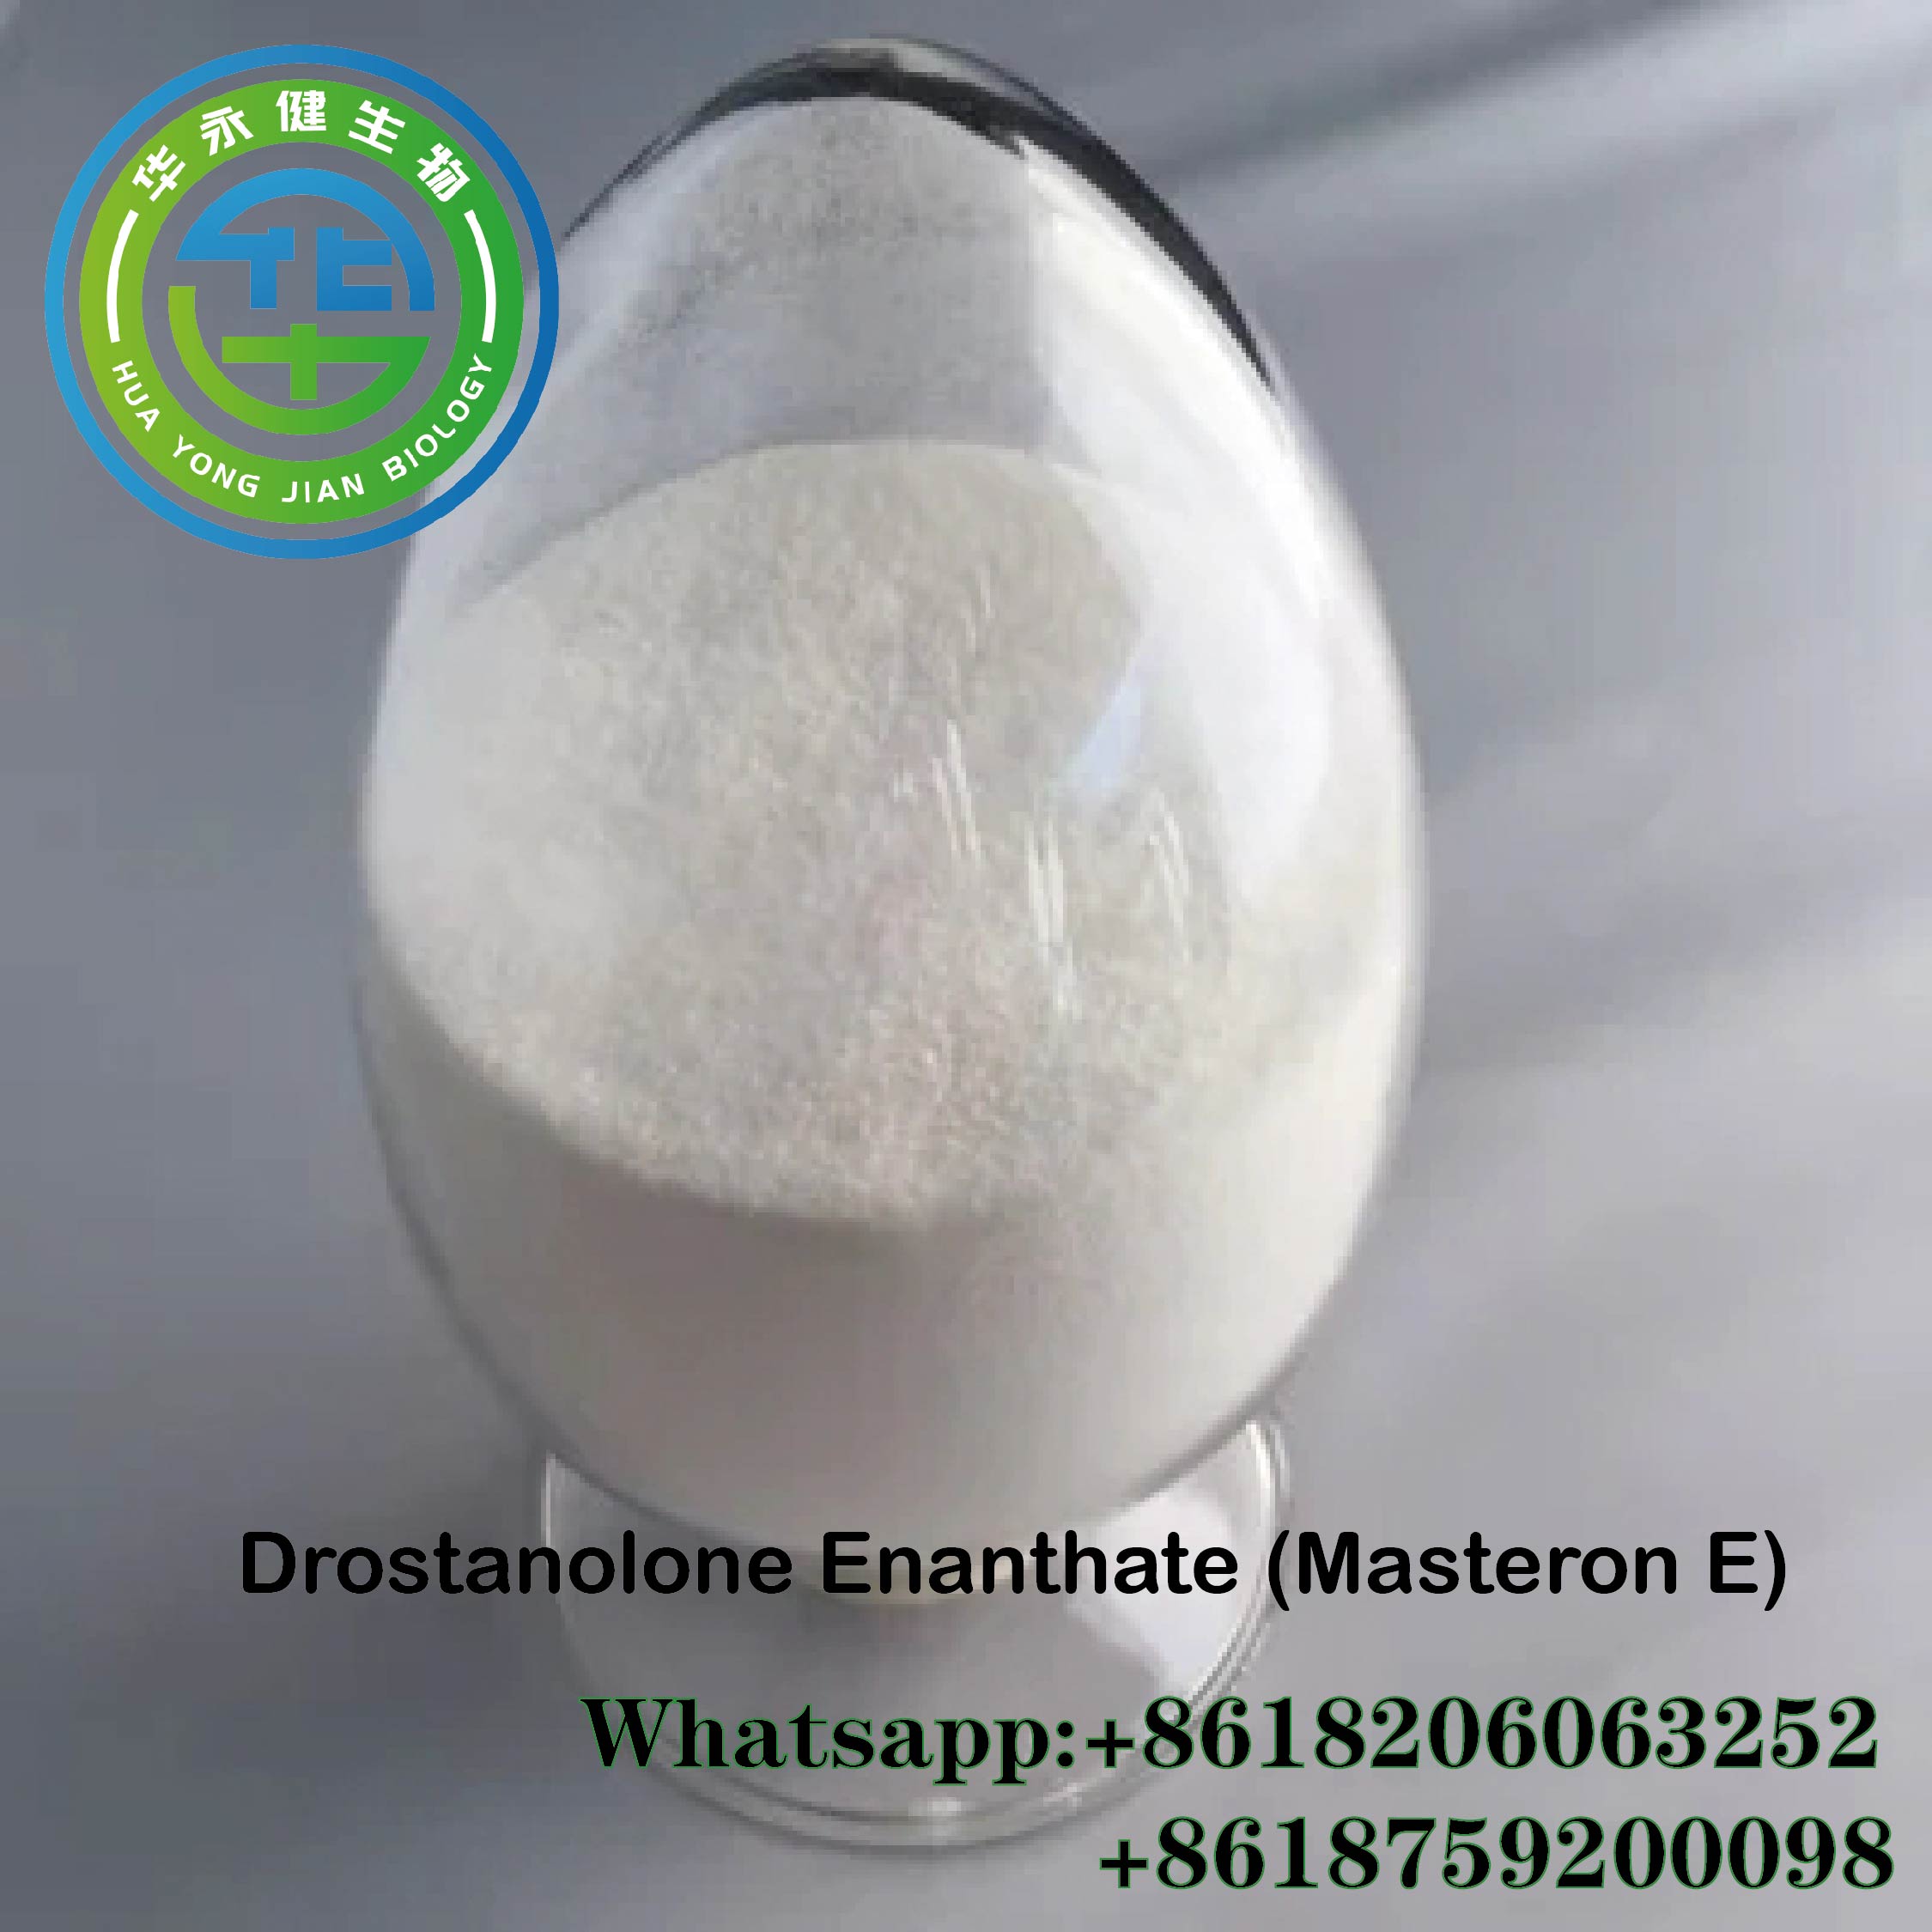 Drostanolone Enanthate Powder DE Legal Masteron E Steroid Alang sa Pag-angkon sa Kaunuran CasNO.303-42-4 Featured Image